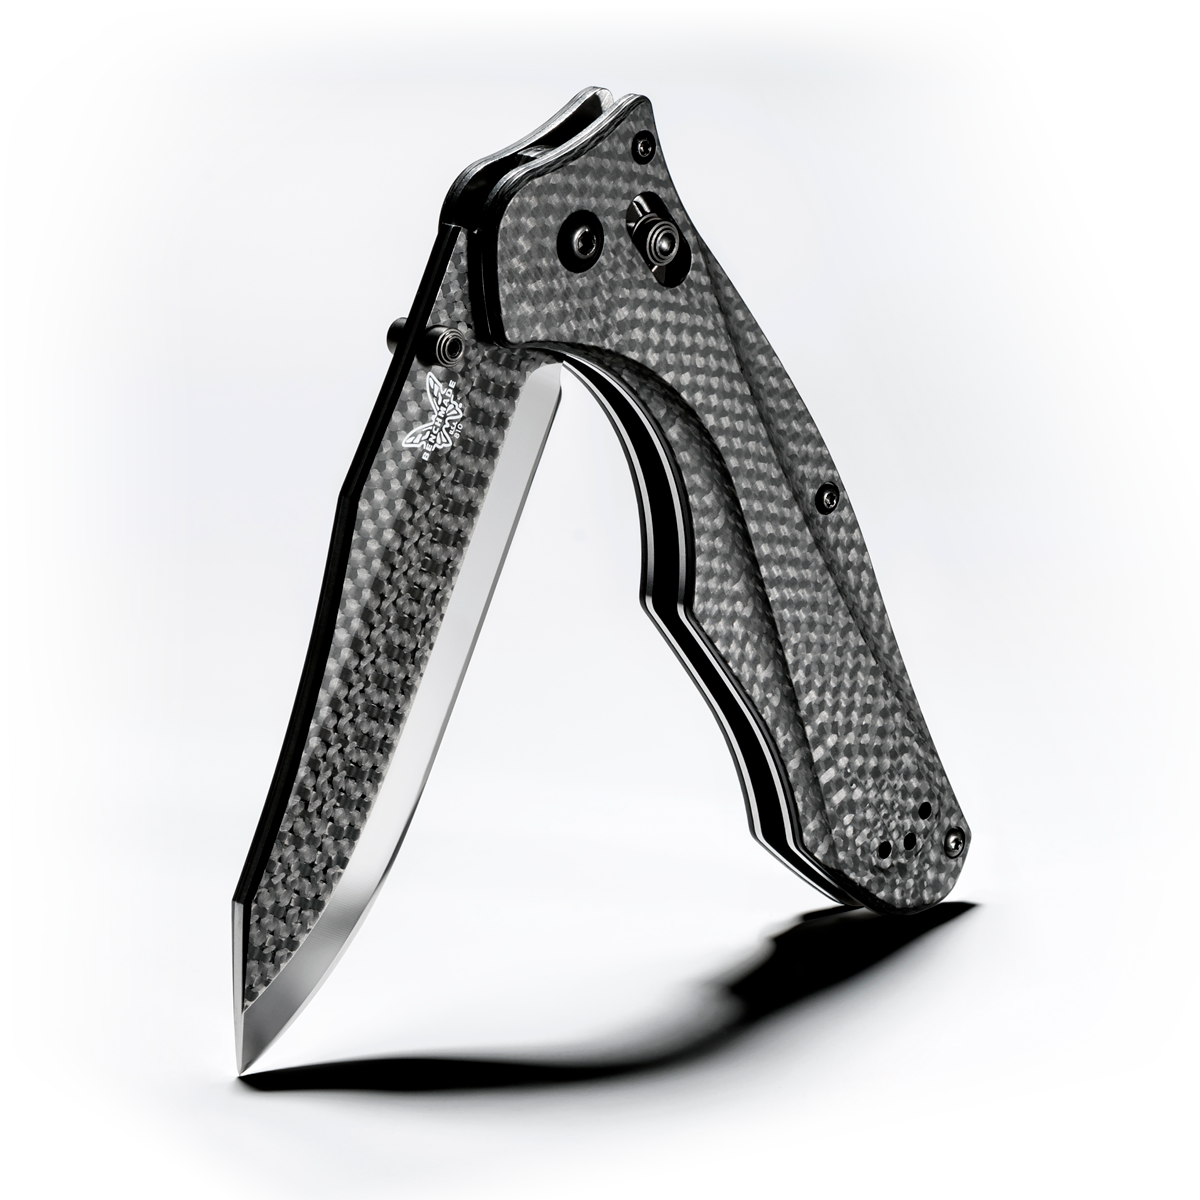 benchmark knives carbon fiber